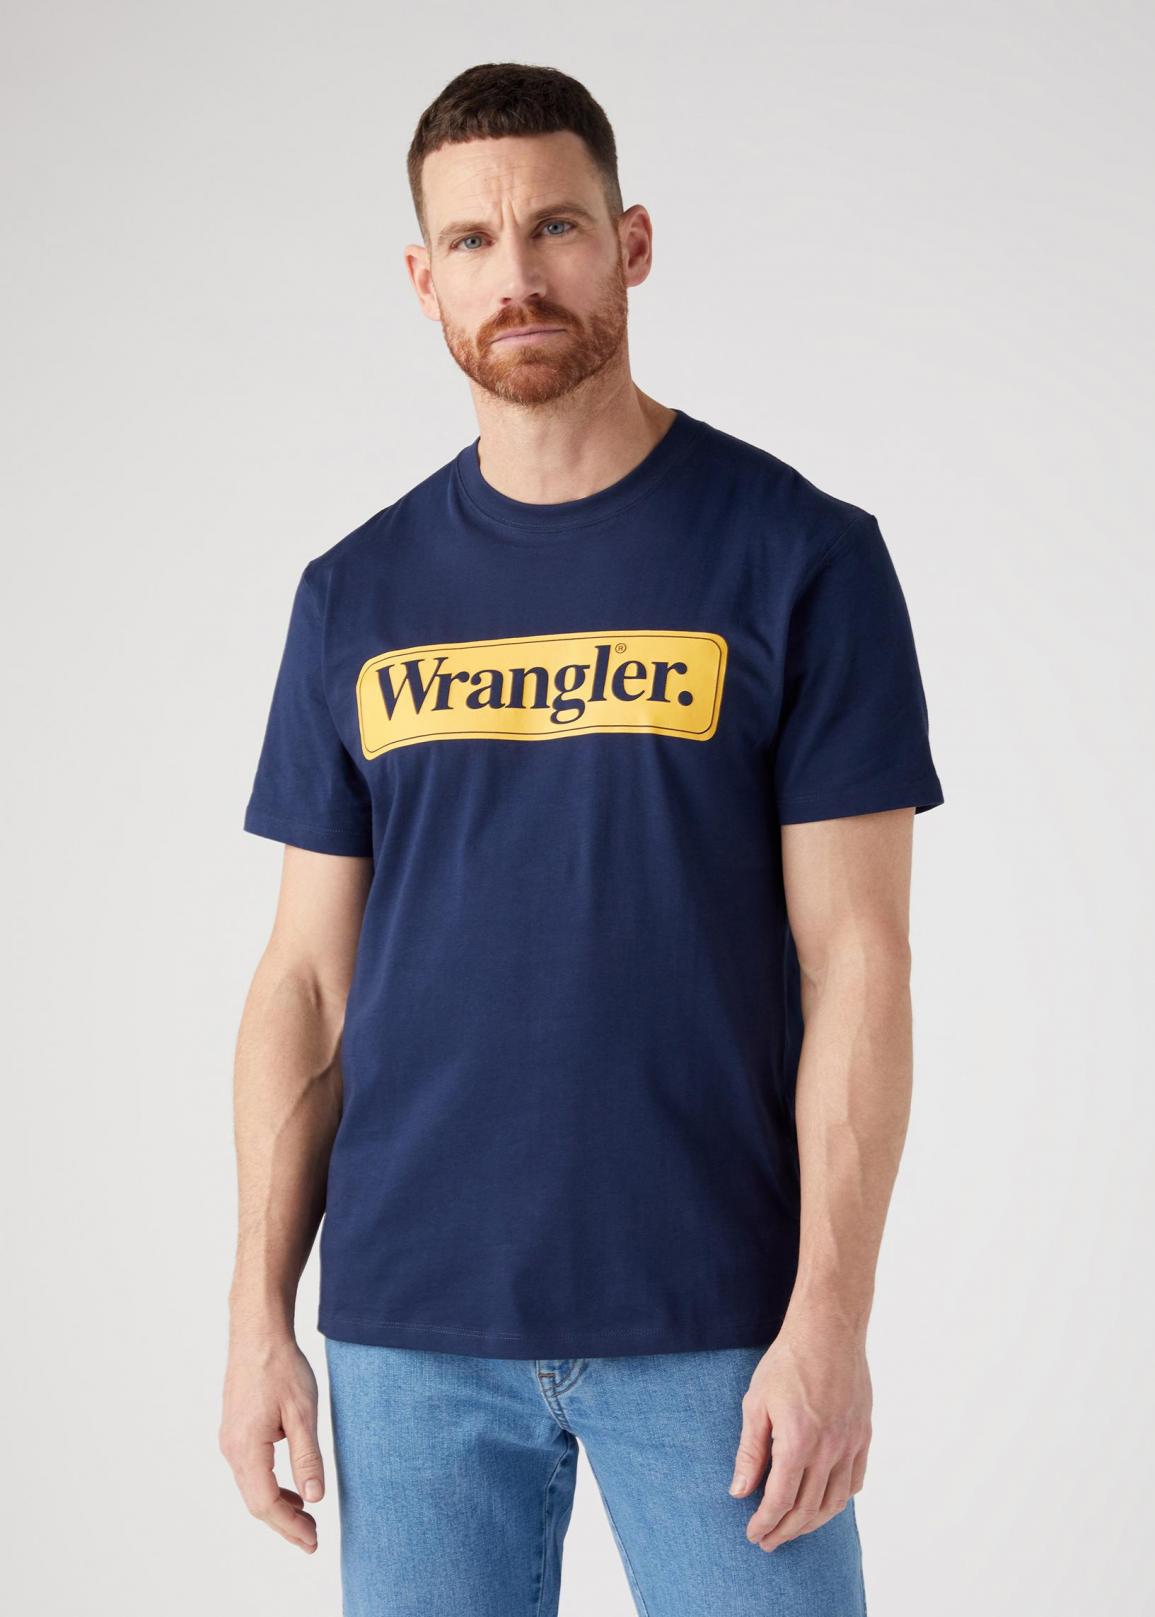 Wrangler® Tee - Navy